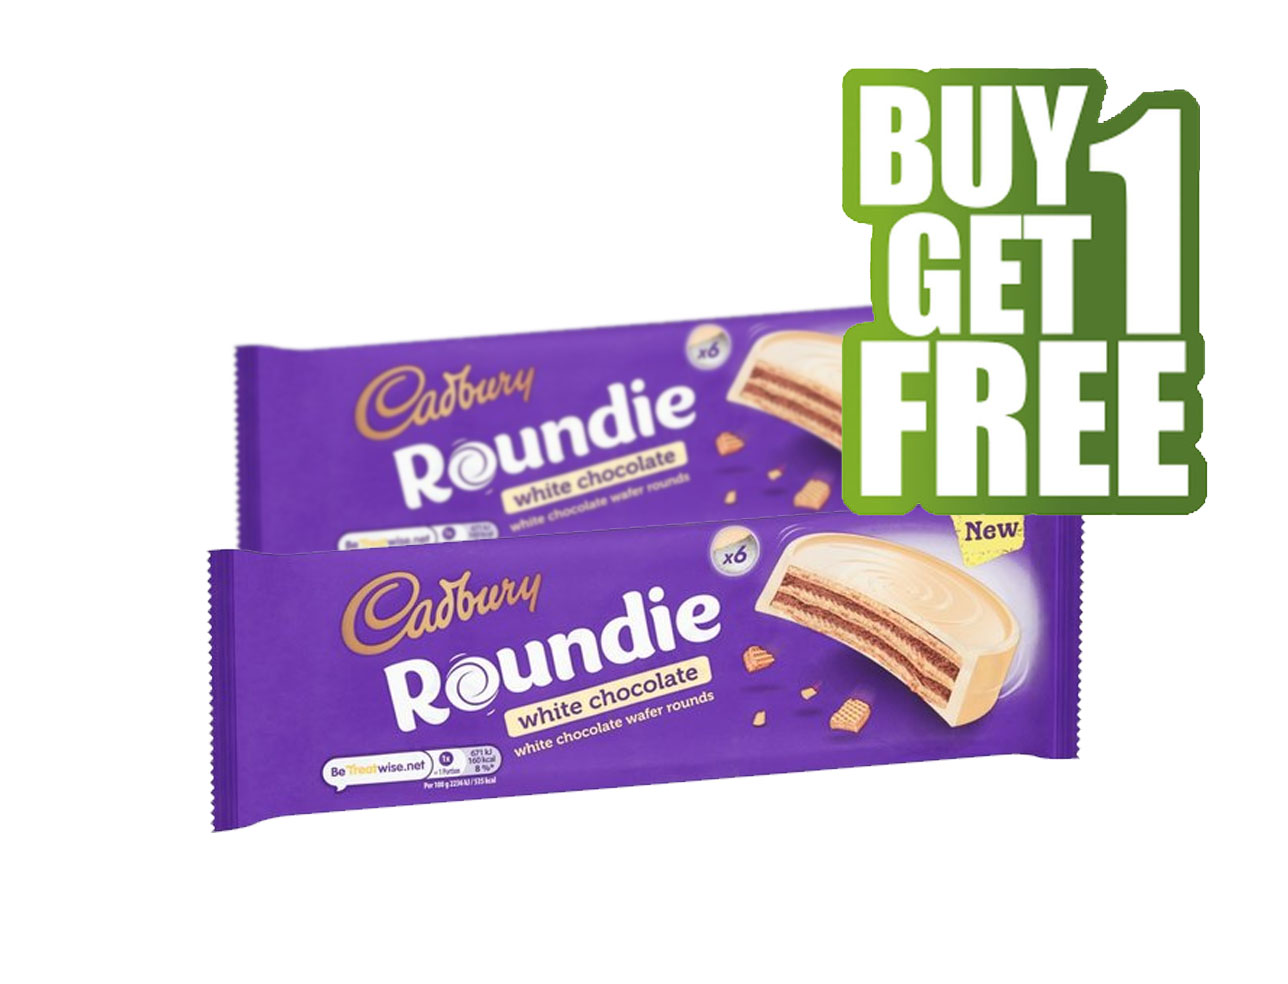 Best Before 26/07/2022  BOGOF Cadbury Roundie White Chocolate Biscuits 6 Pack